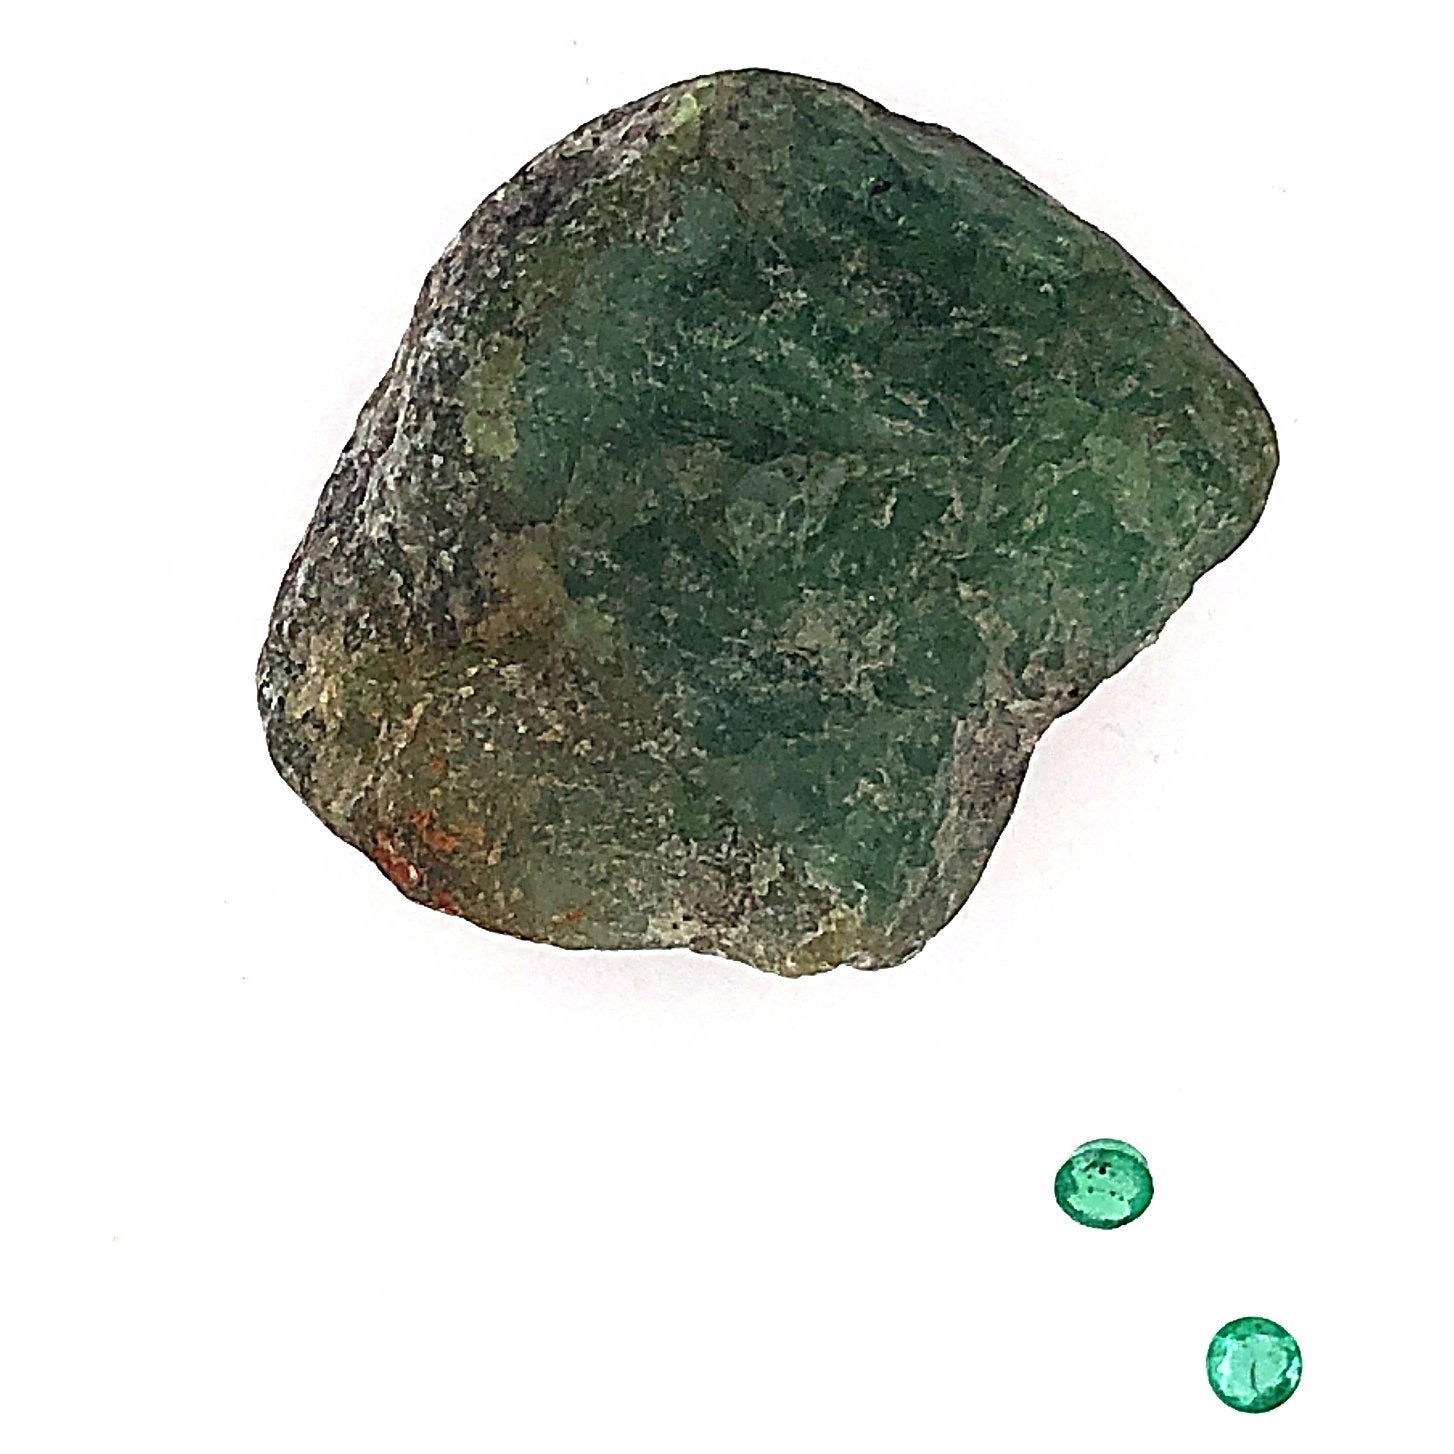 material: emerald